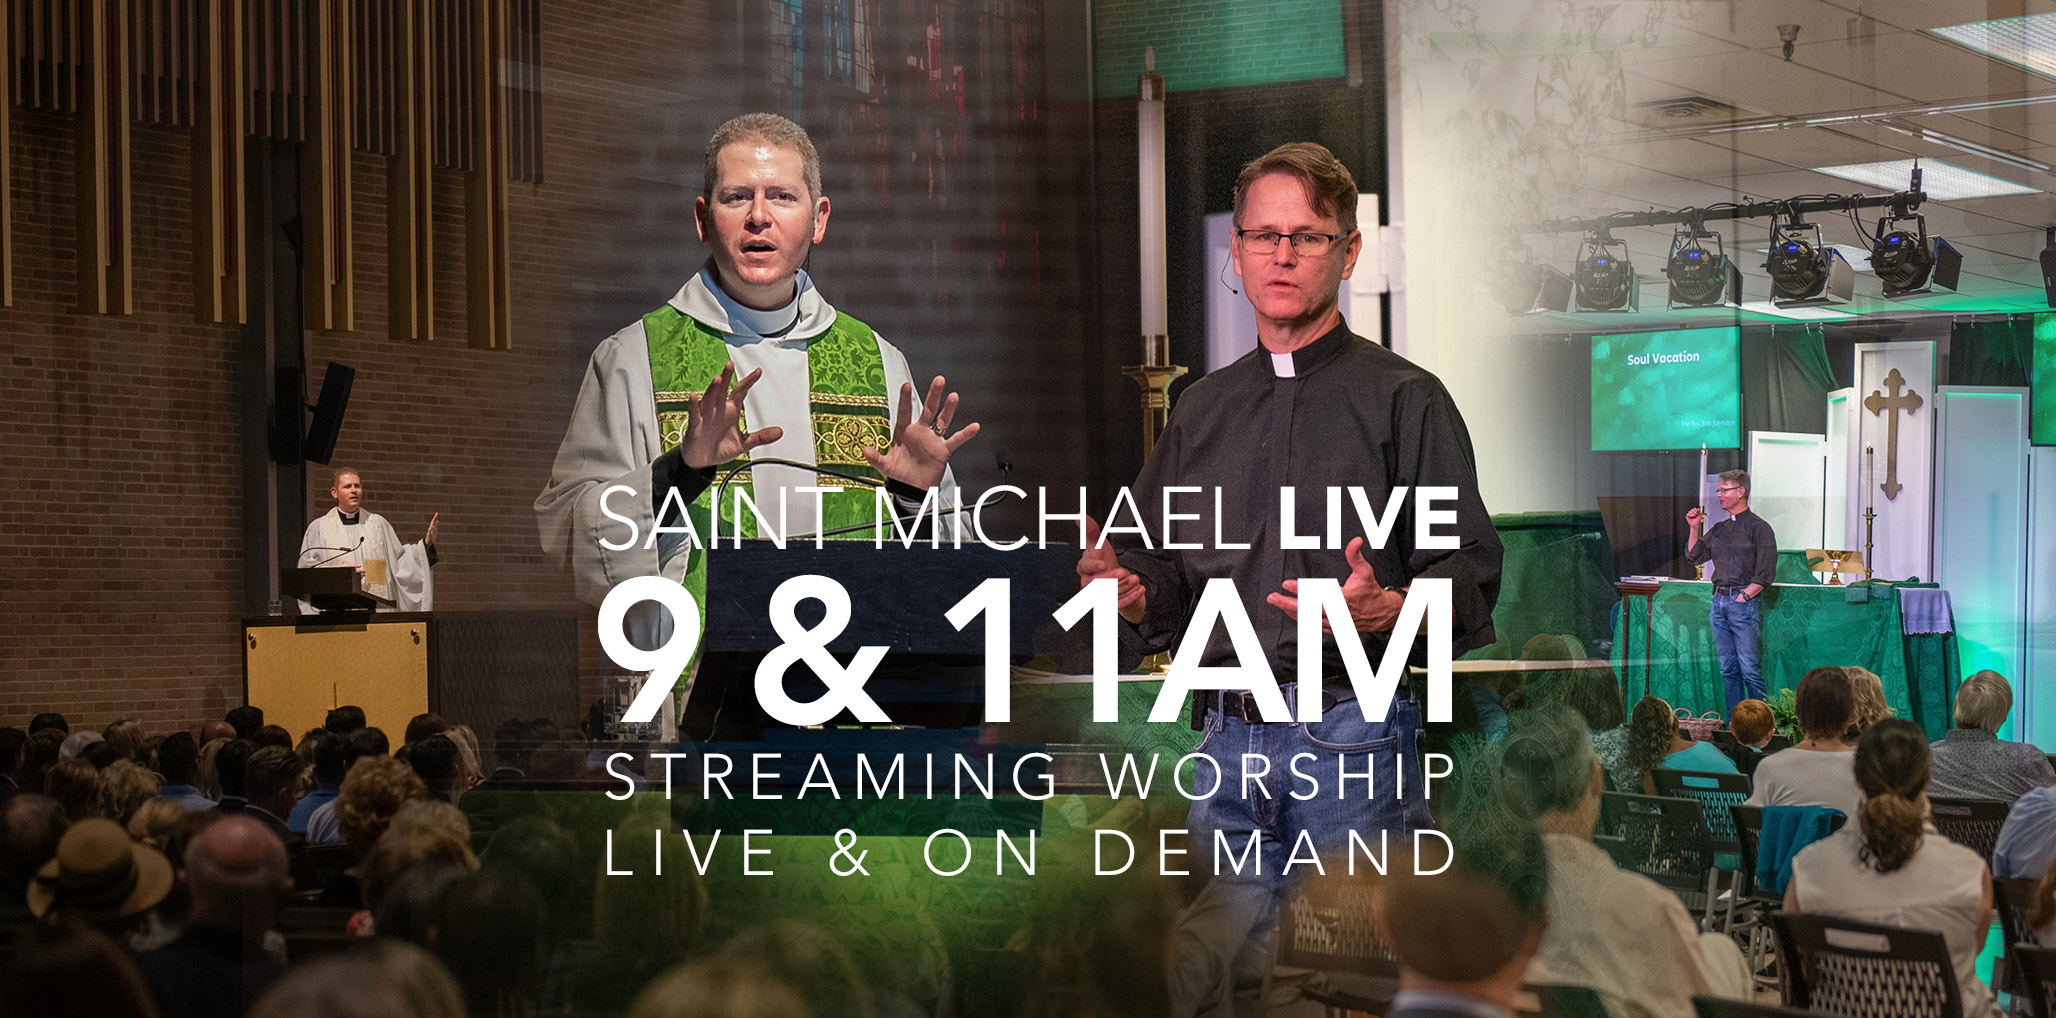 SAINT MICHAEL LIVESTREAM WORSHIP! | Saint Michael and All Angels